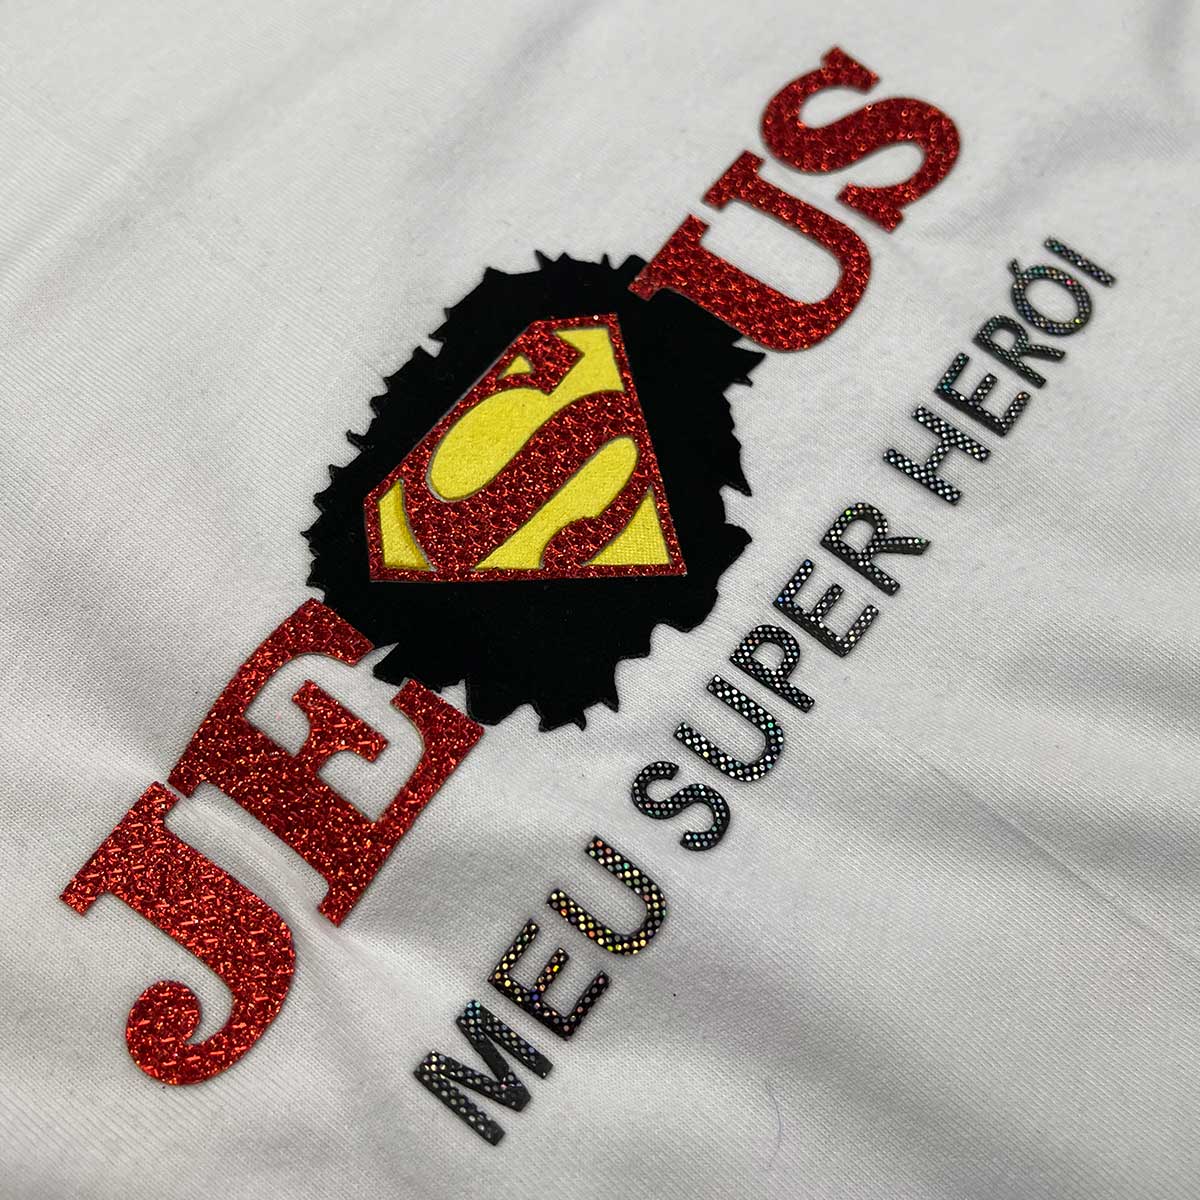 T-Shirt Infantil Branca Jesus Meu Super Herói